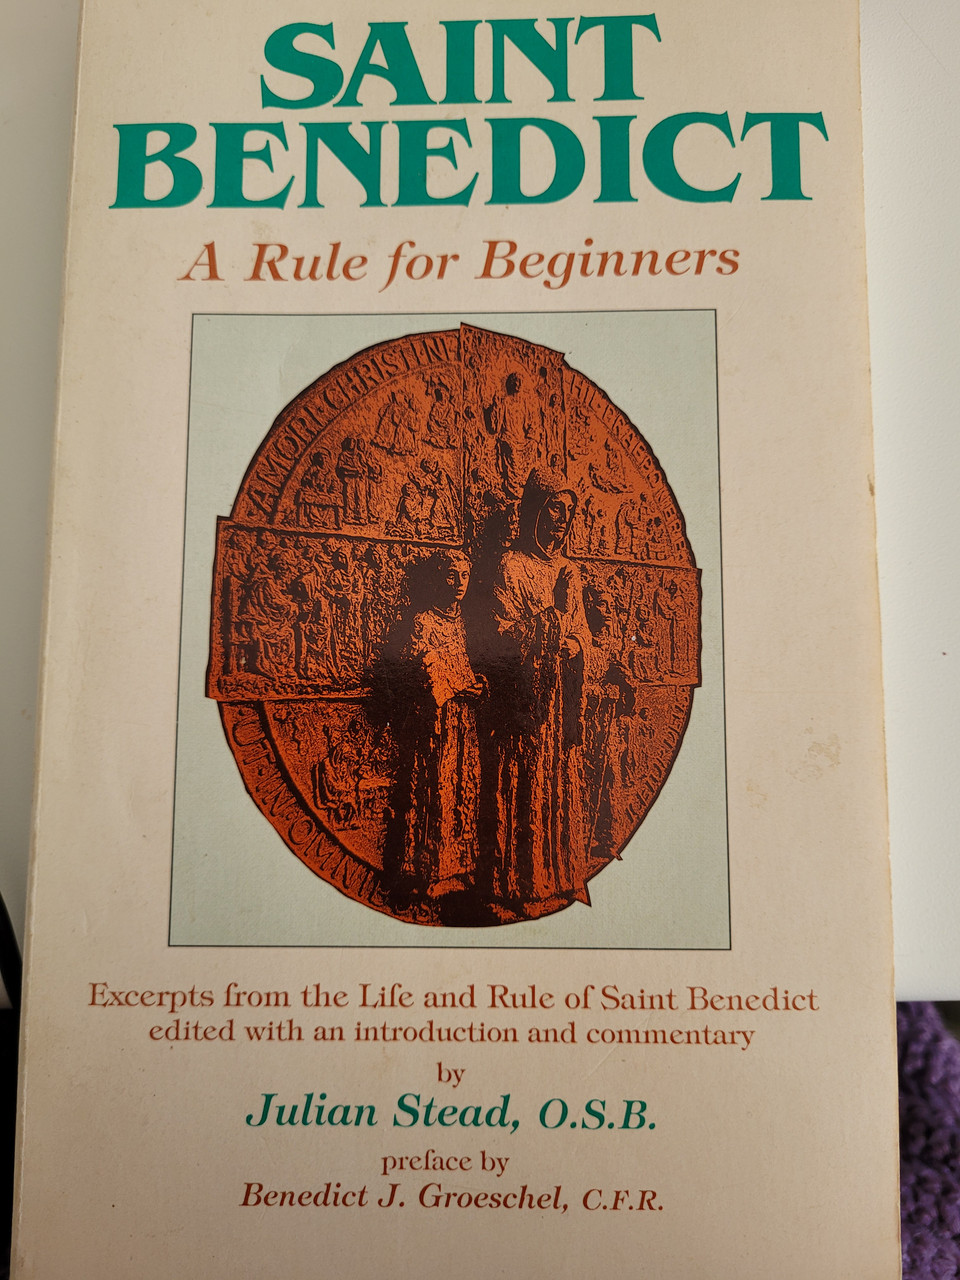 Saint Benedict A Rule for Beginners by Julian Stead